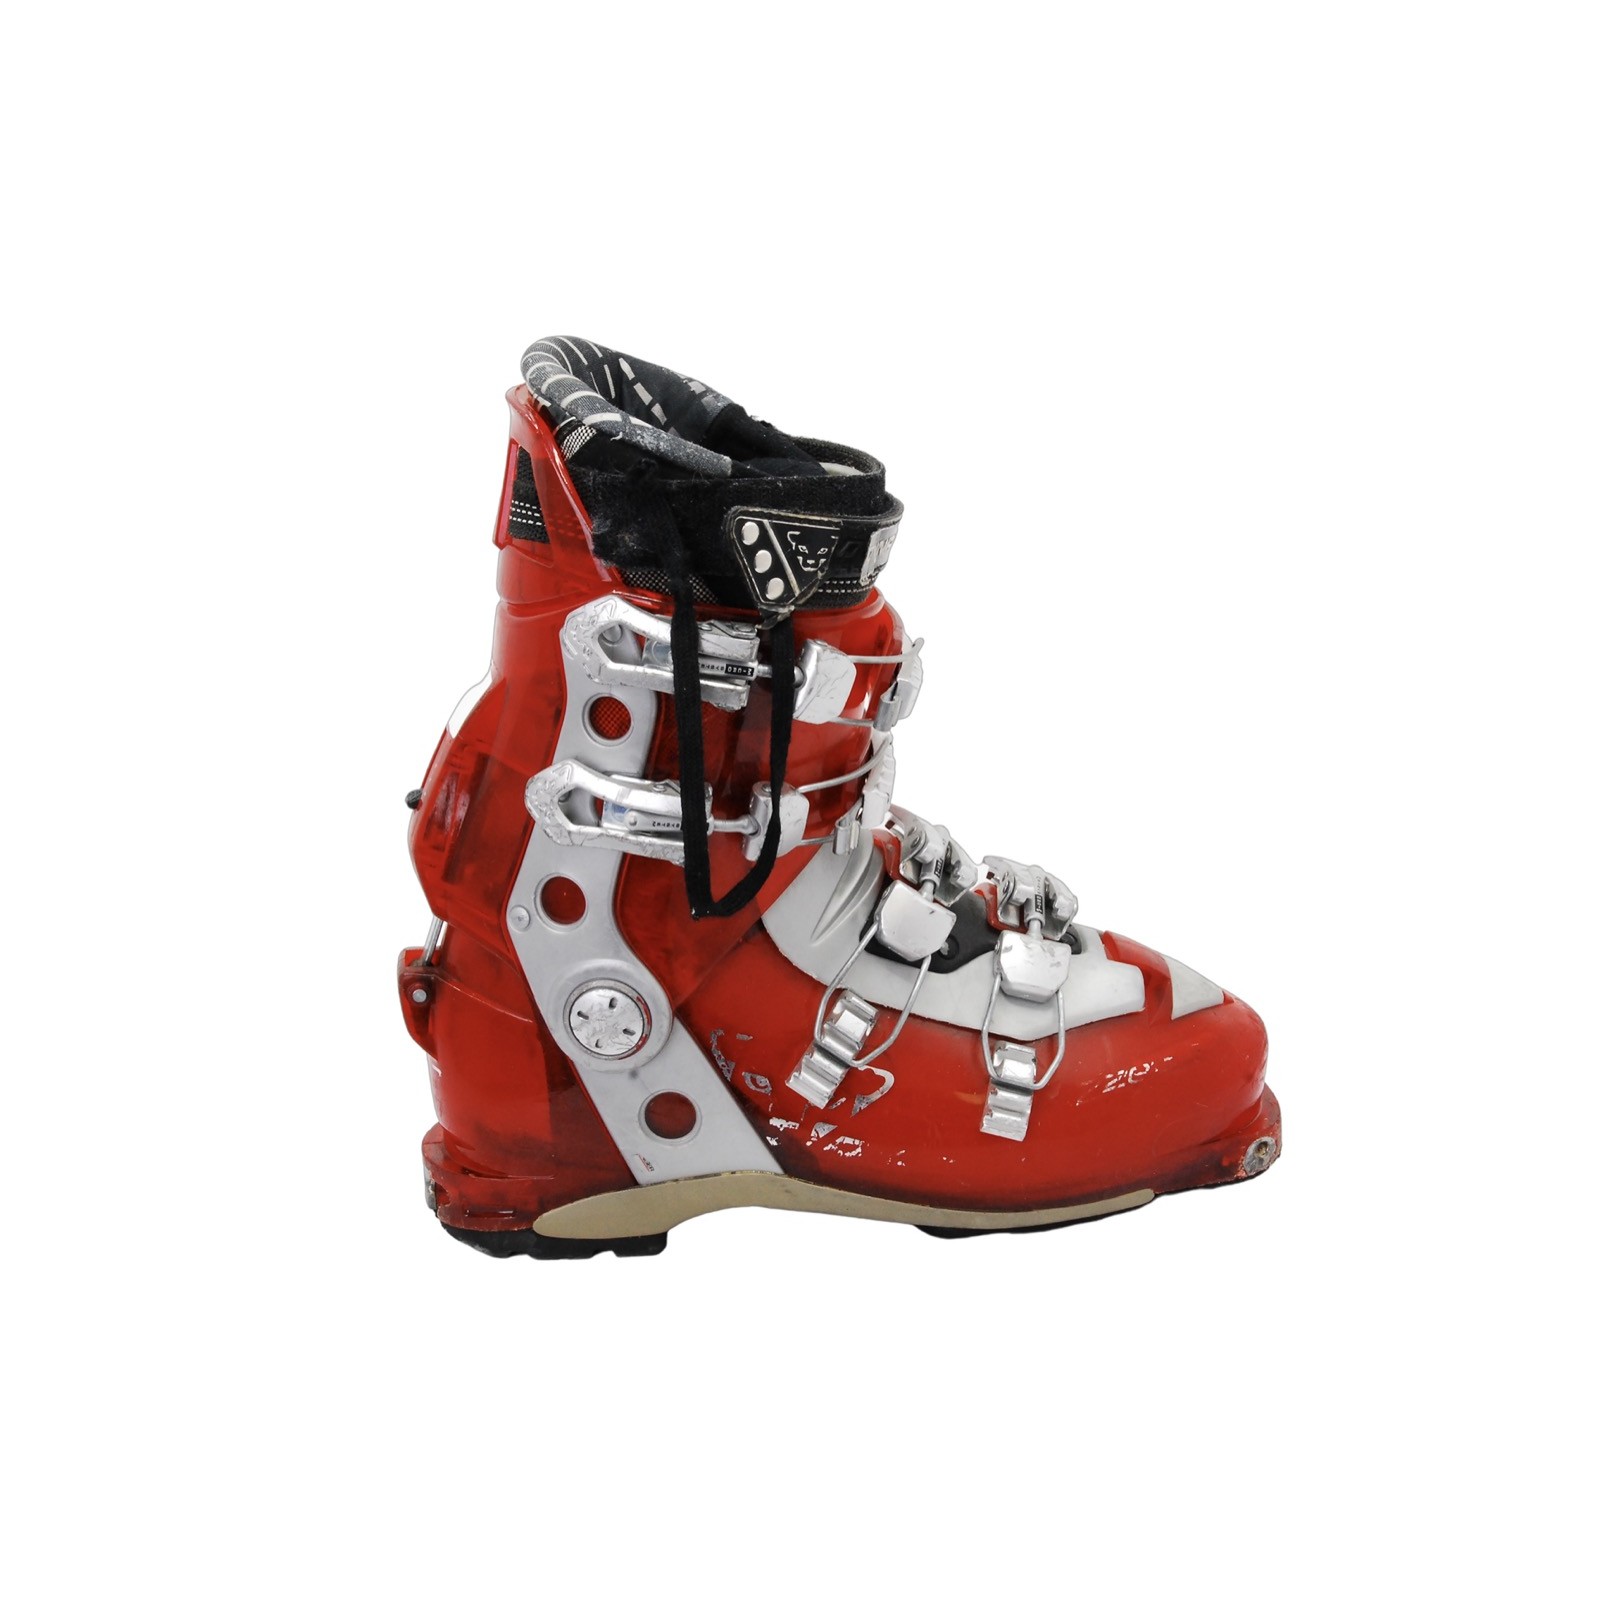 chaussures ski alpin homme occasion - Chaussures ski garanties l Everide